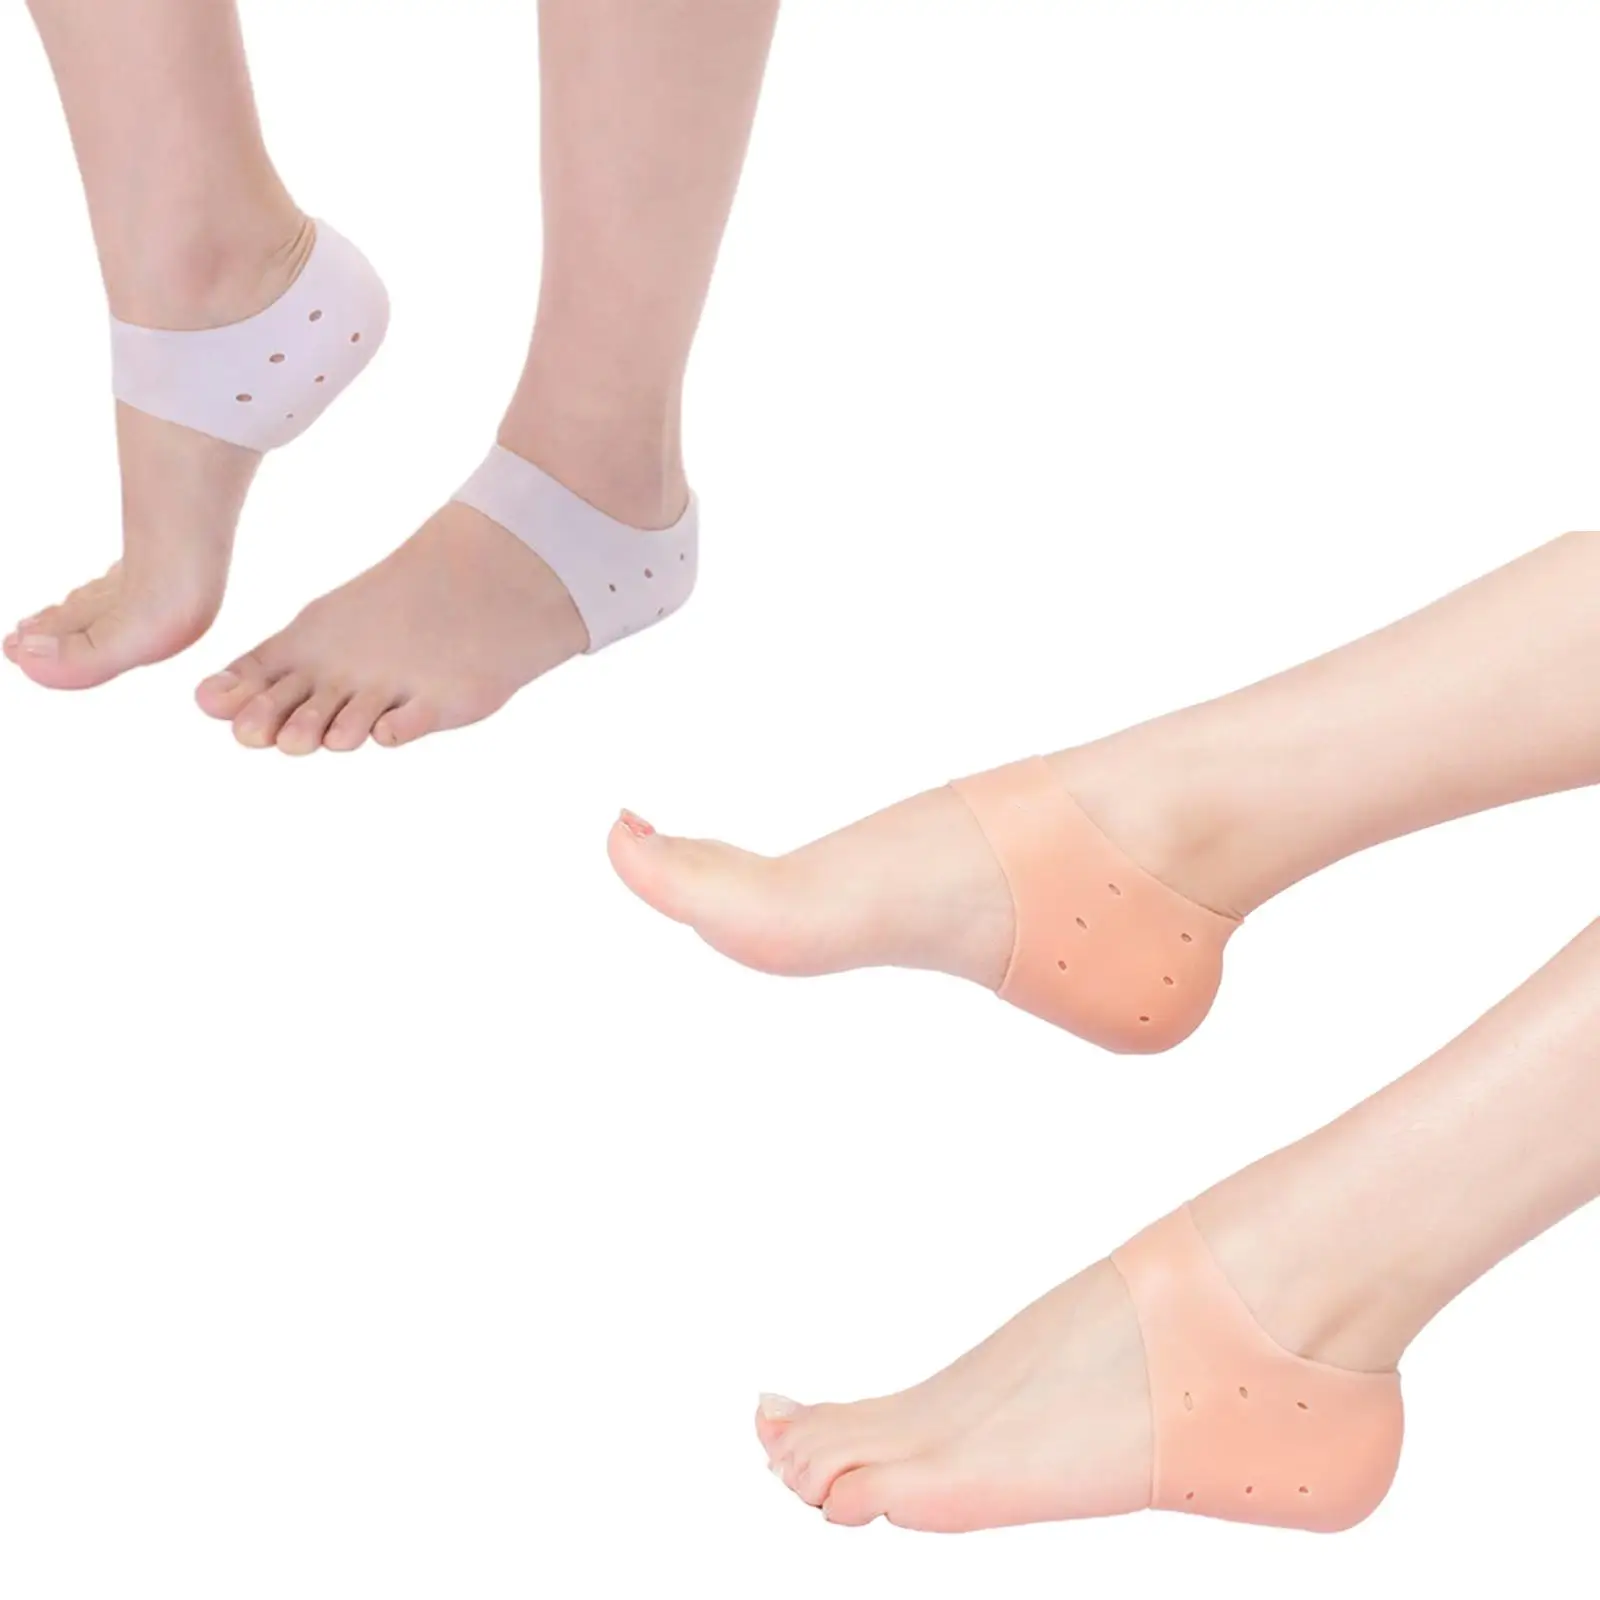 Silicone Gel Heel Protector Heel Protective Pad Sock Sleeves for Plantar Fasciitis